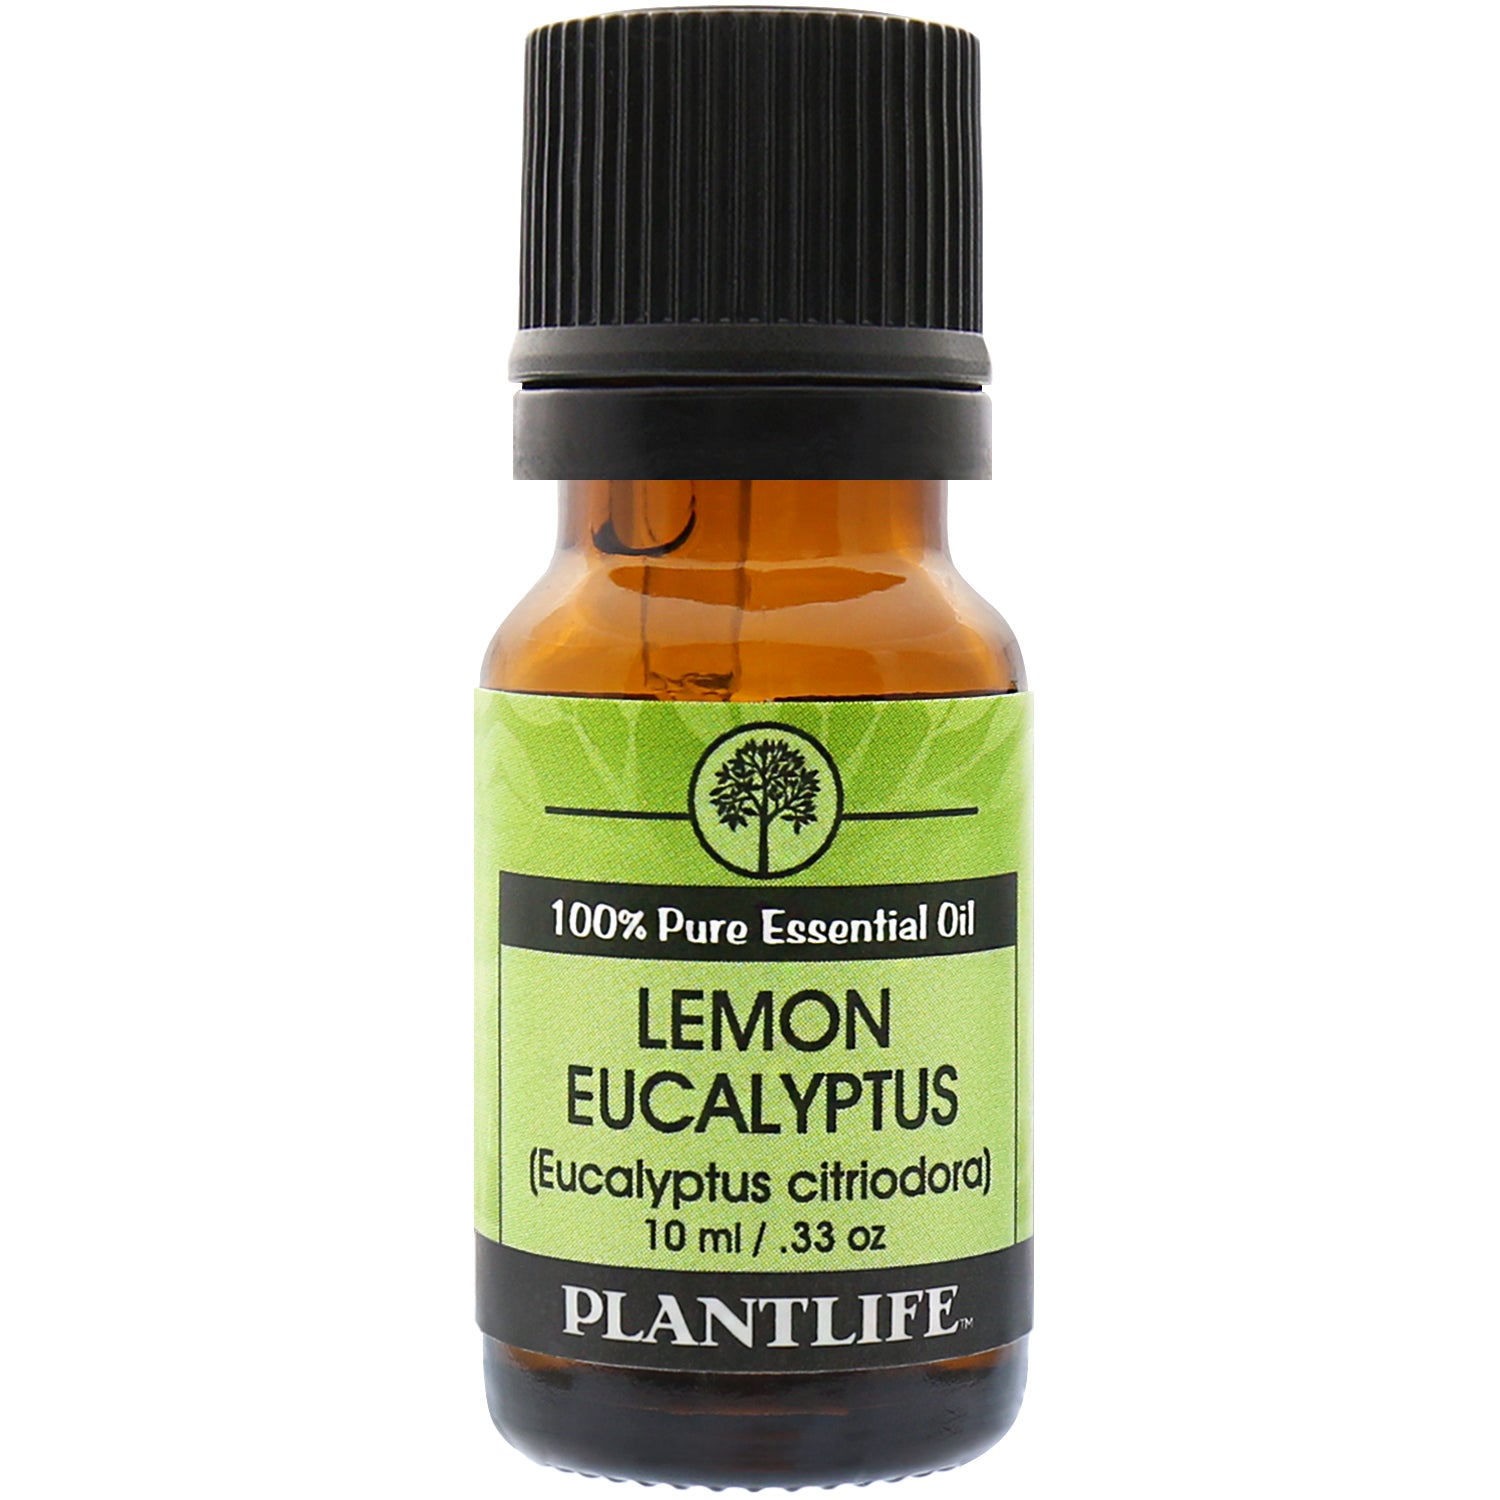 Lemon Eucalyptus, Lemon Eucalyptus essential oil, organic Lemon Eucalyptus  oil